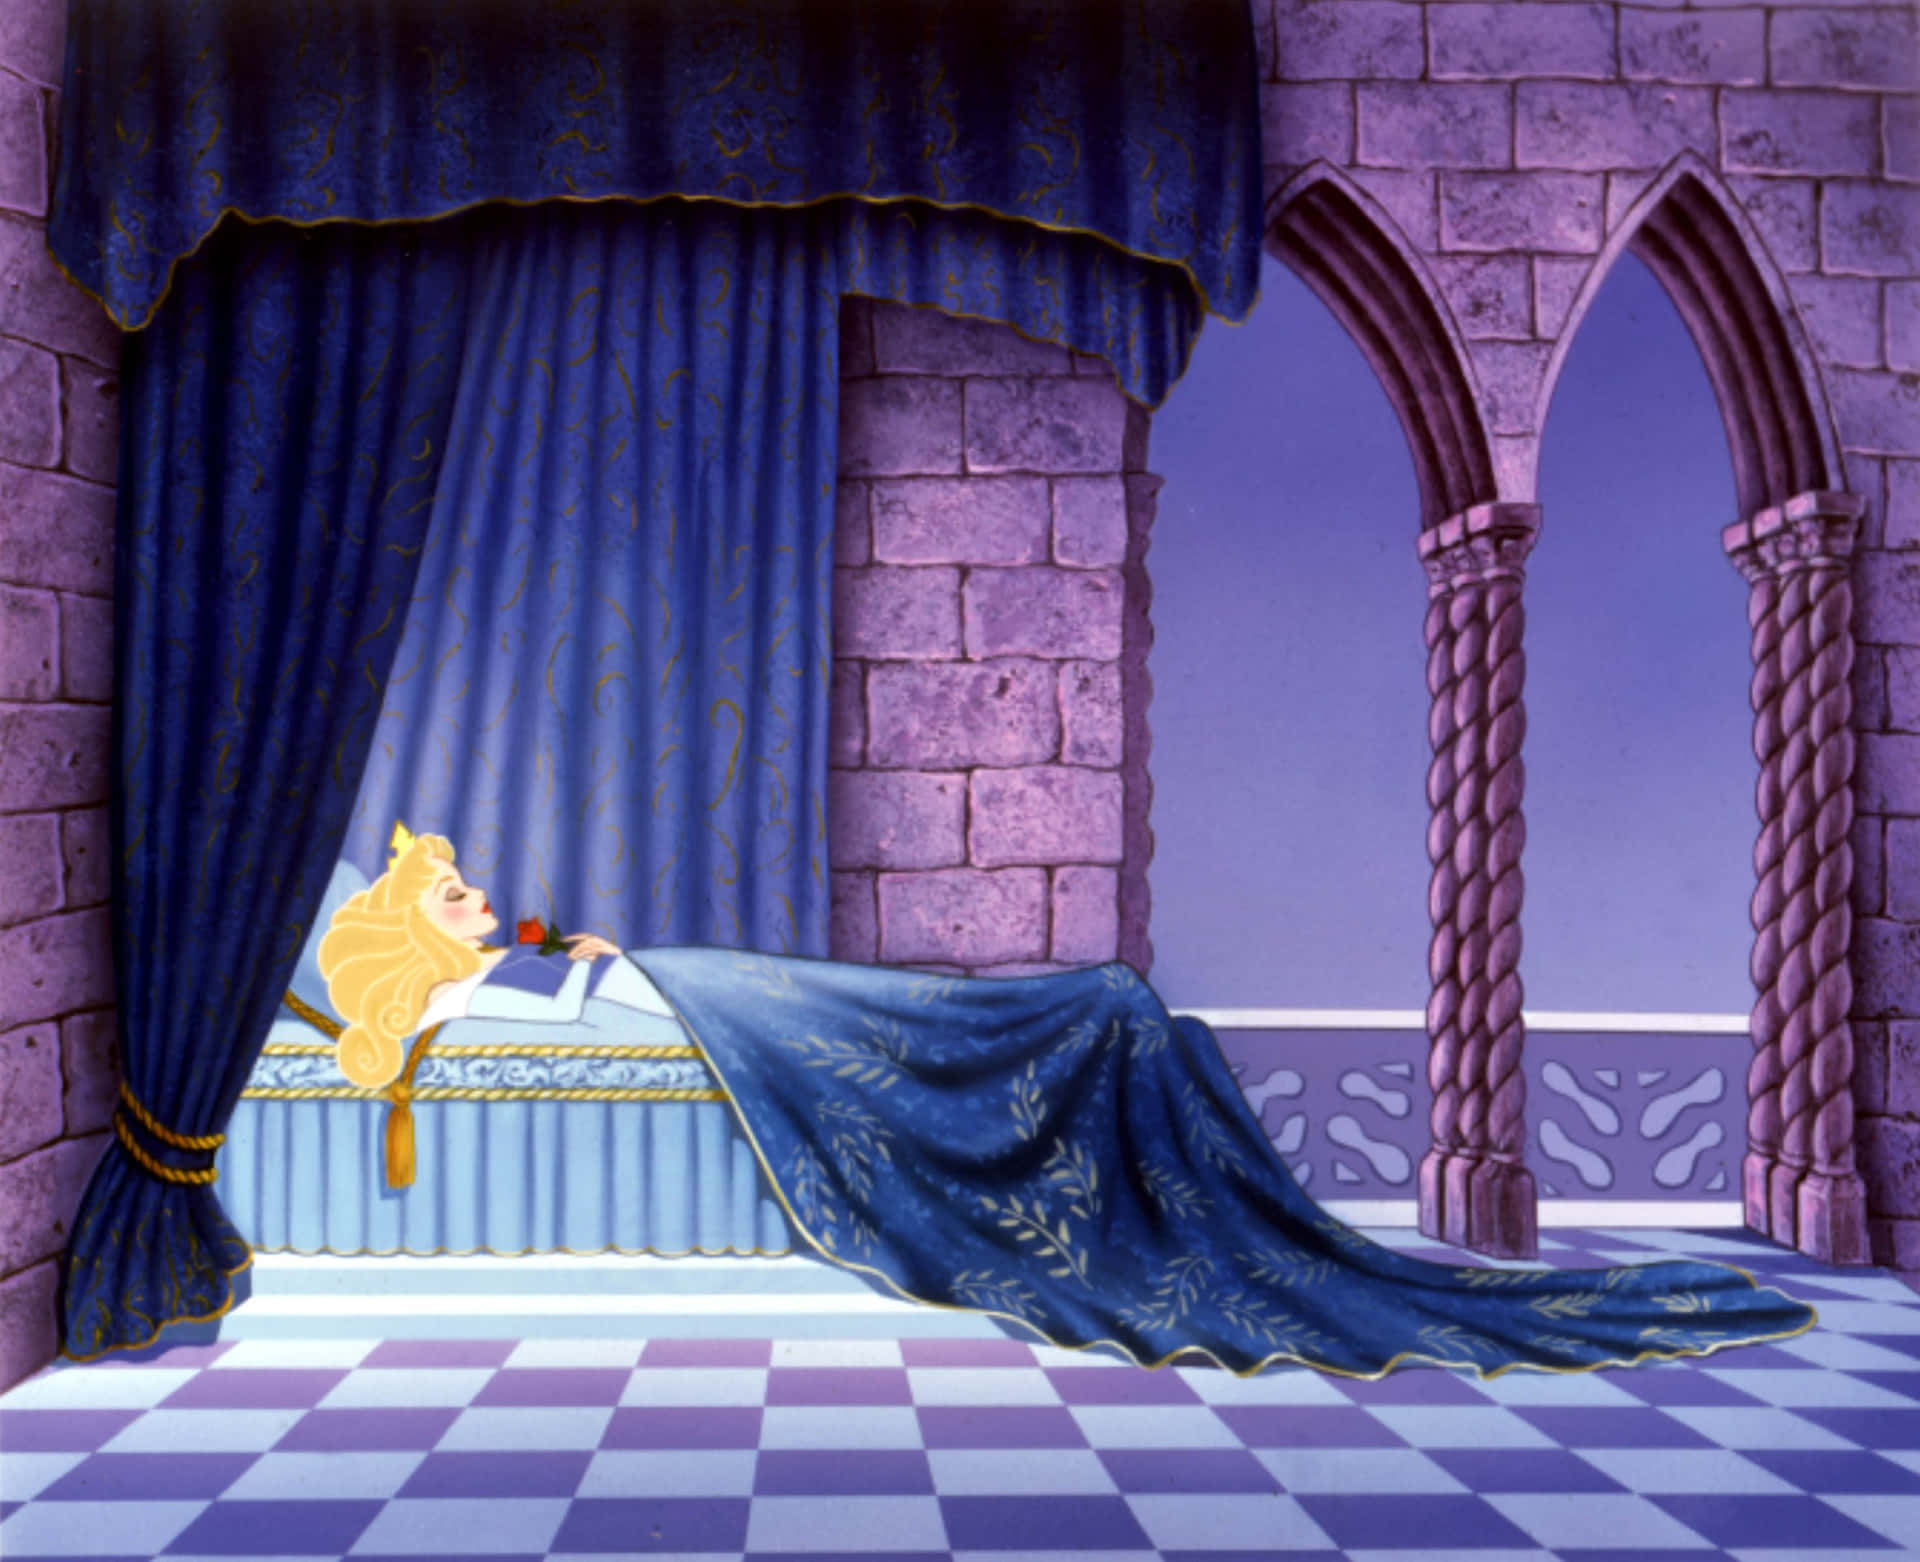 Caption: Enchanting Sleeping Beauty in Slumber Wallpaper